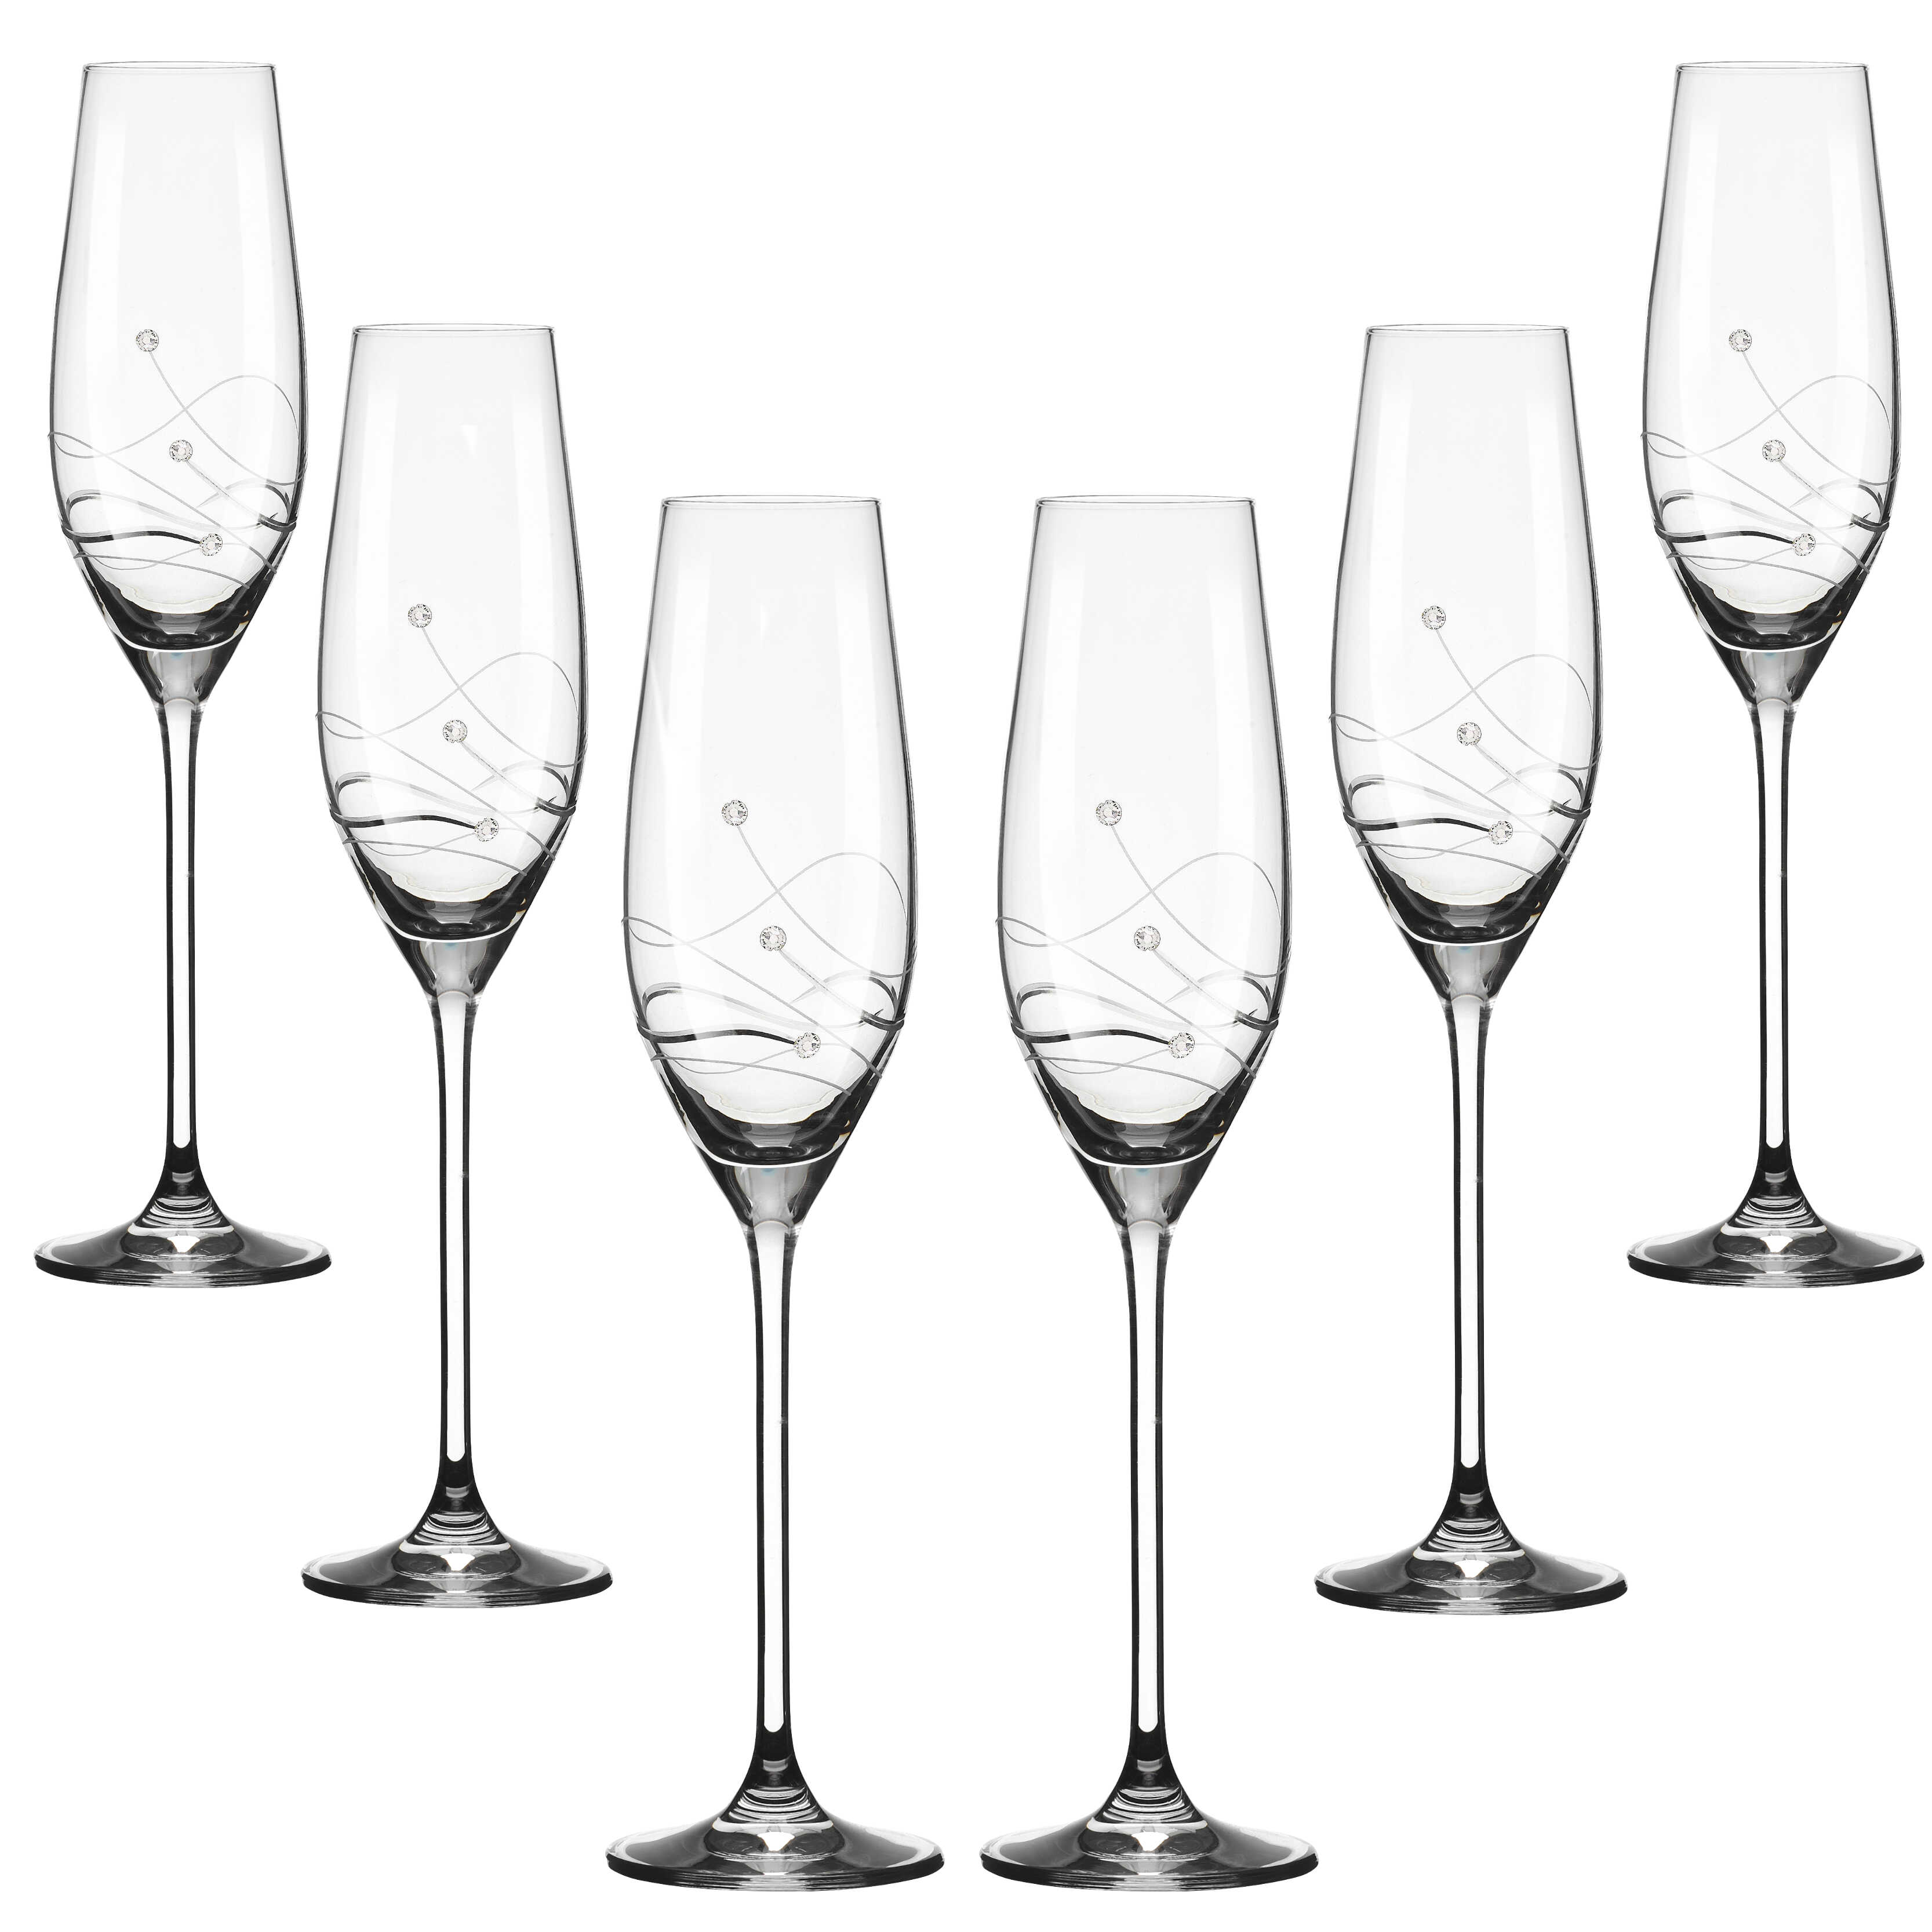 Se Clio Champagneglas med Swarovski krystaller - 6 stk. hos LforLiving.dk